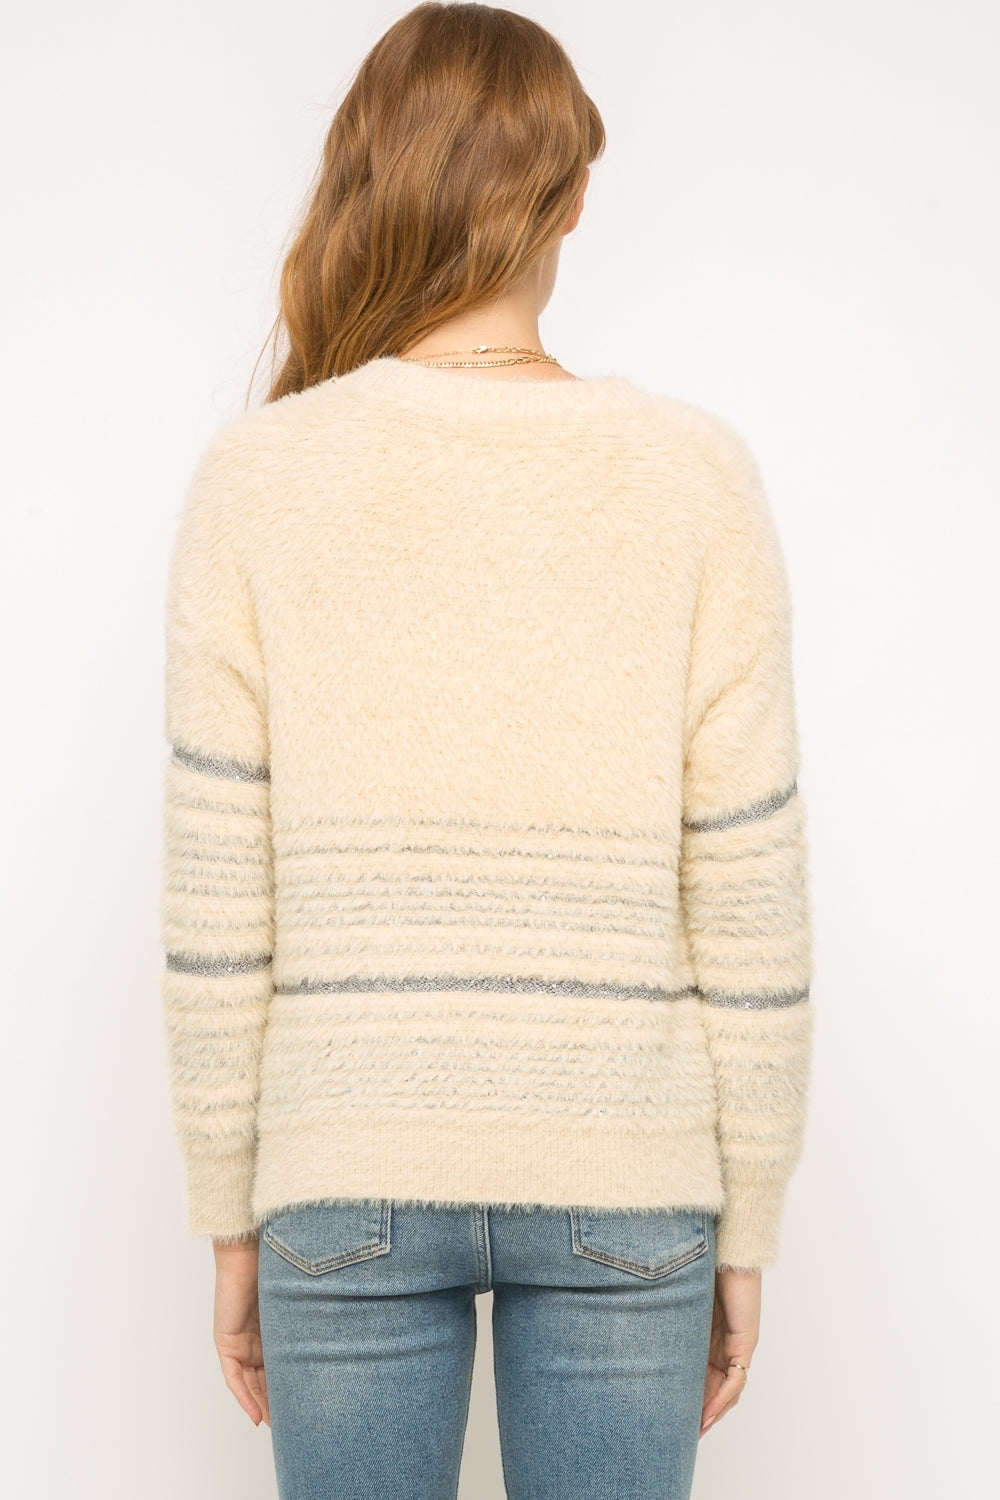 November Sweater